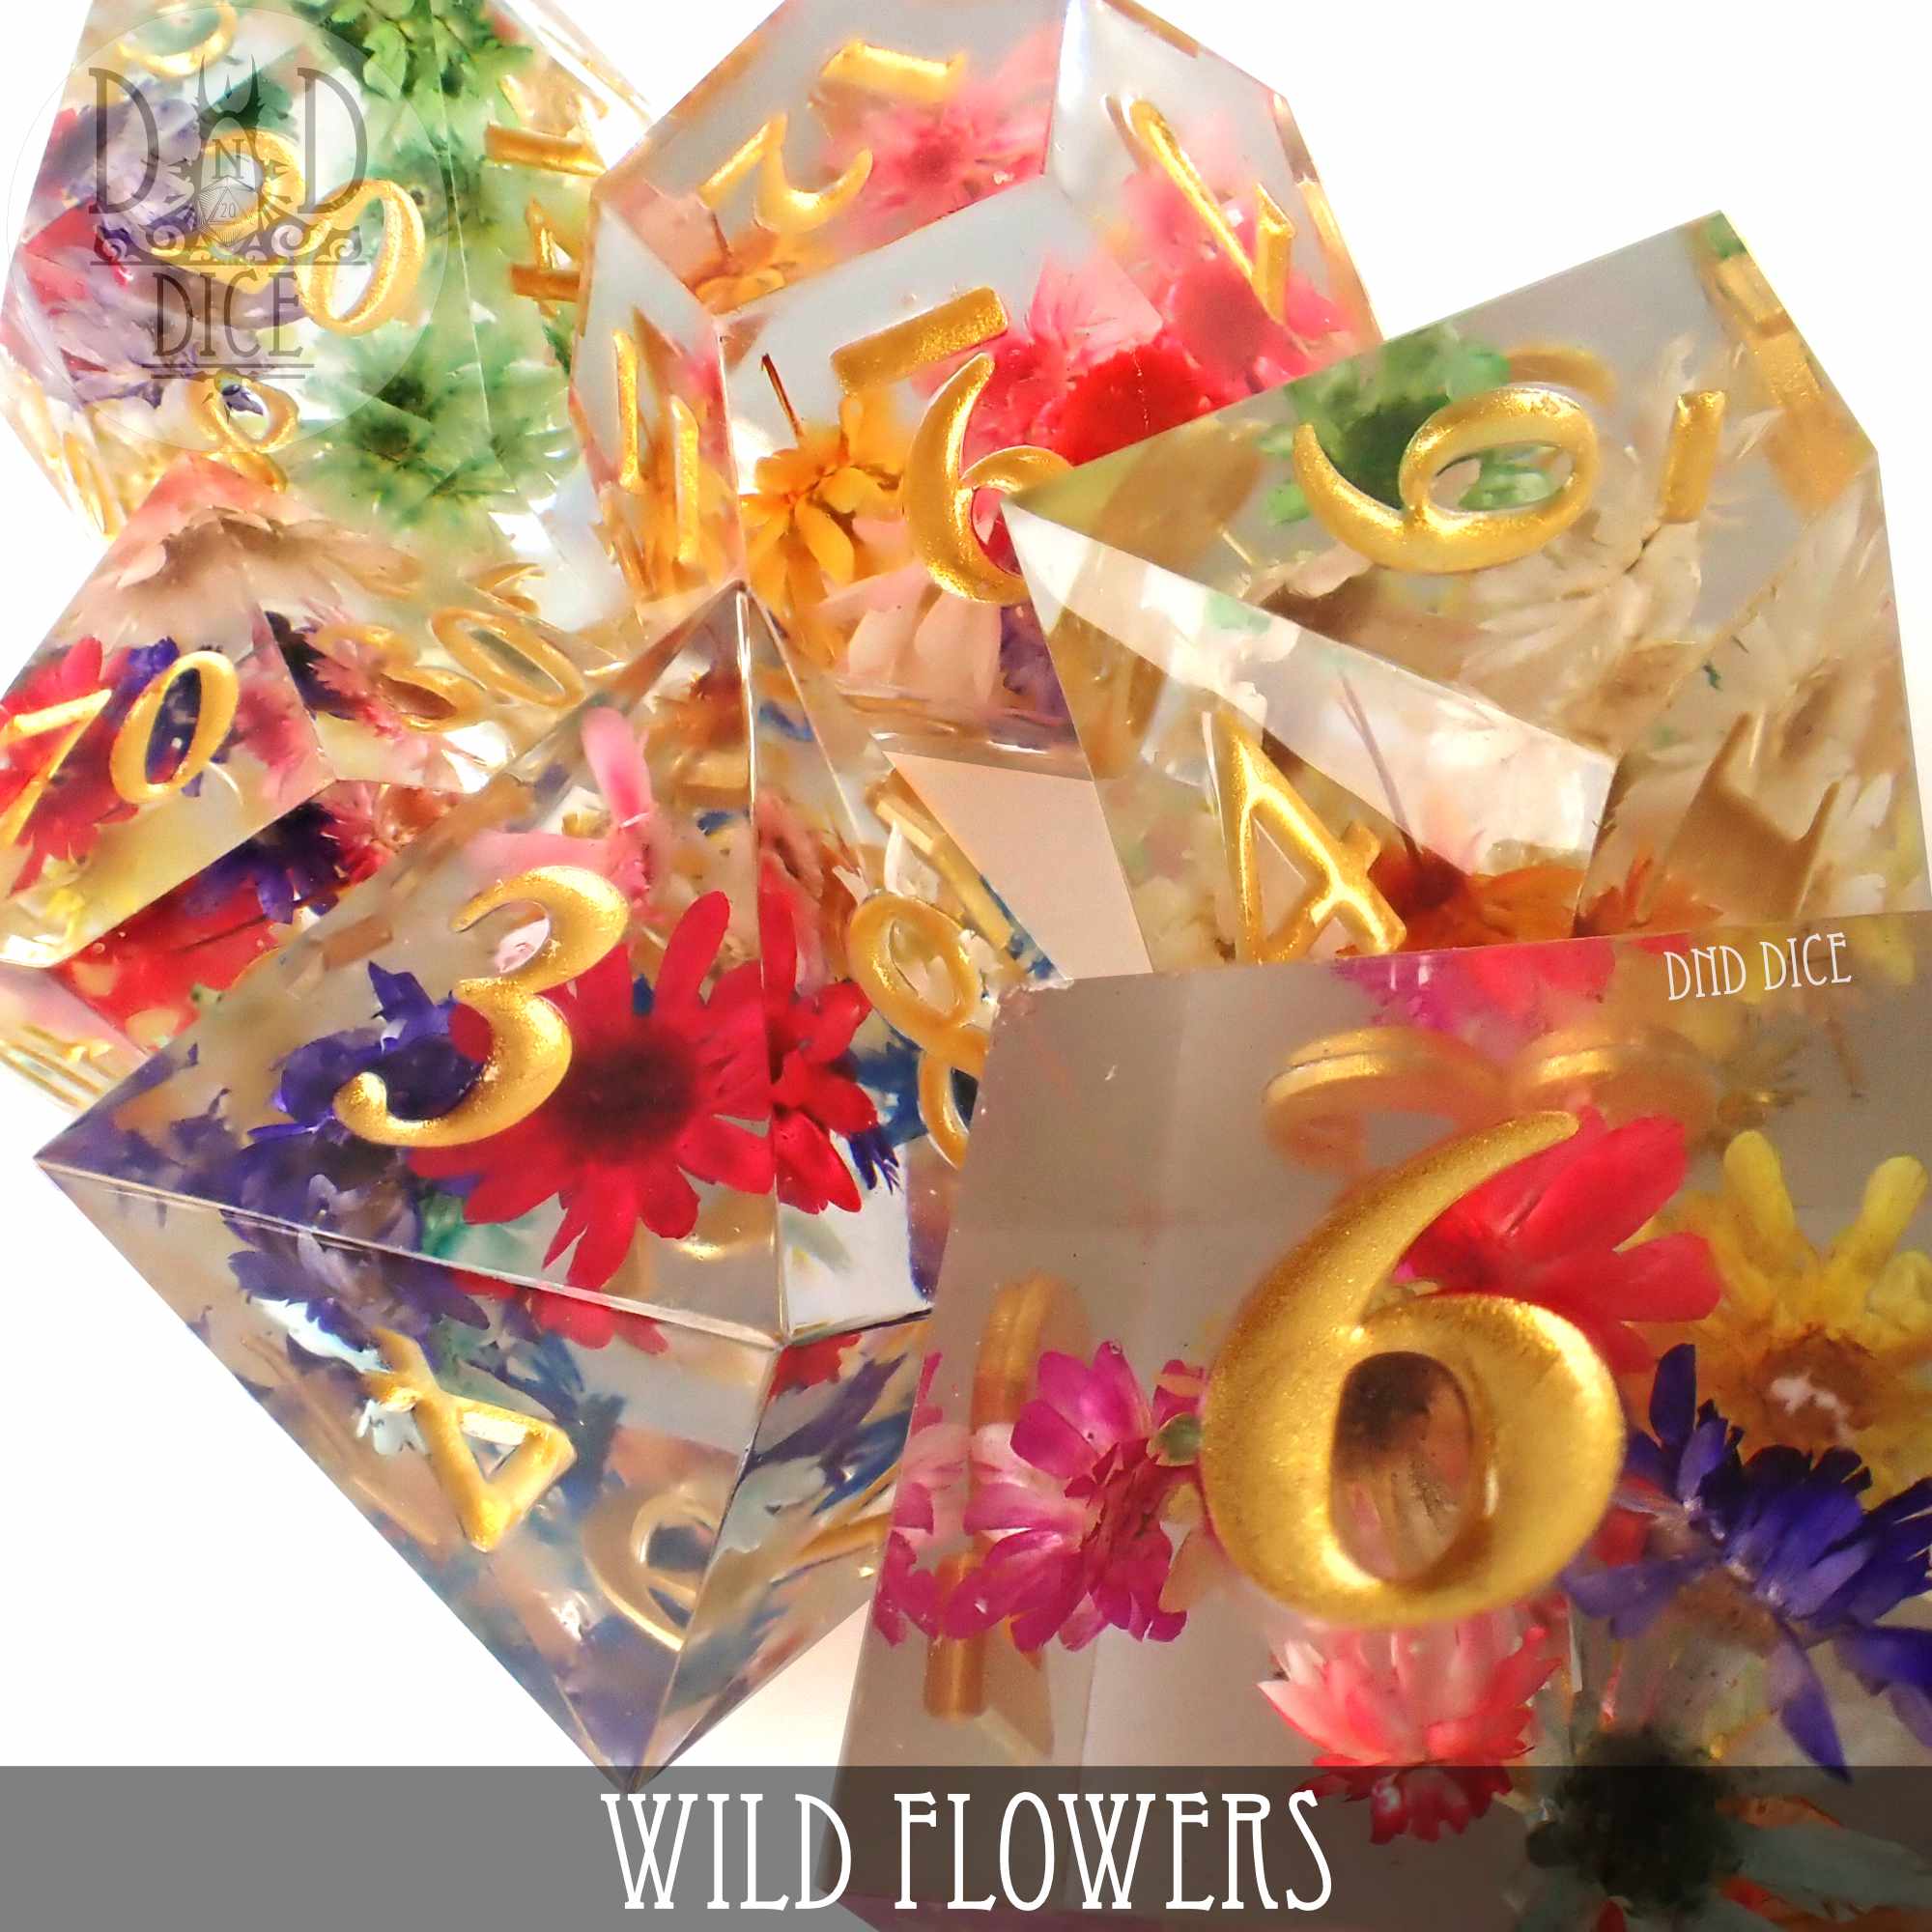 Wild Flowers Handmade Dice Set